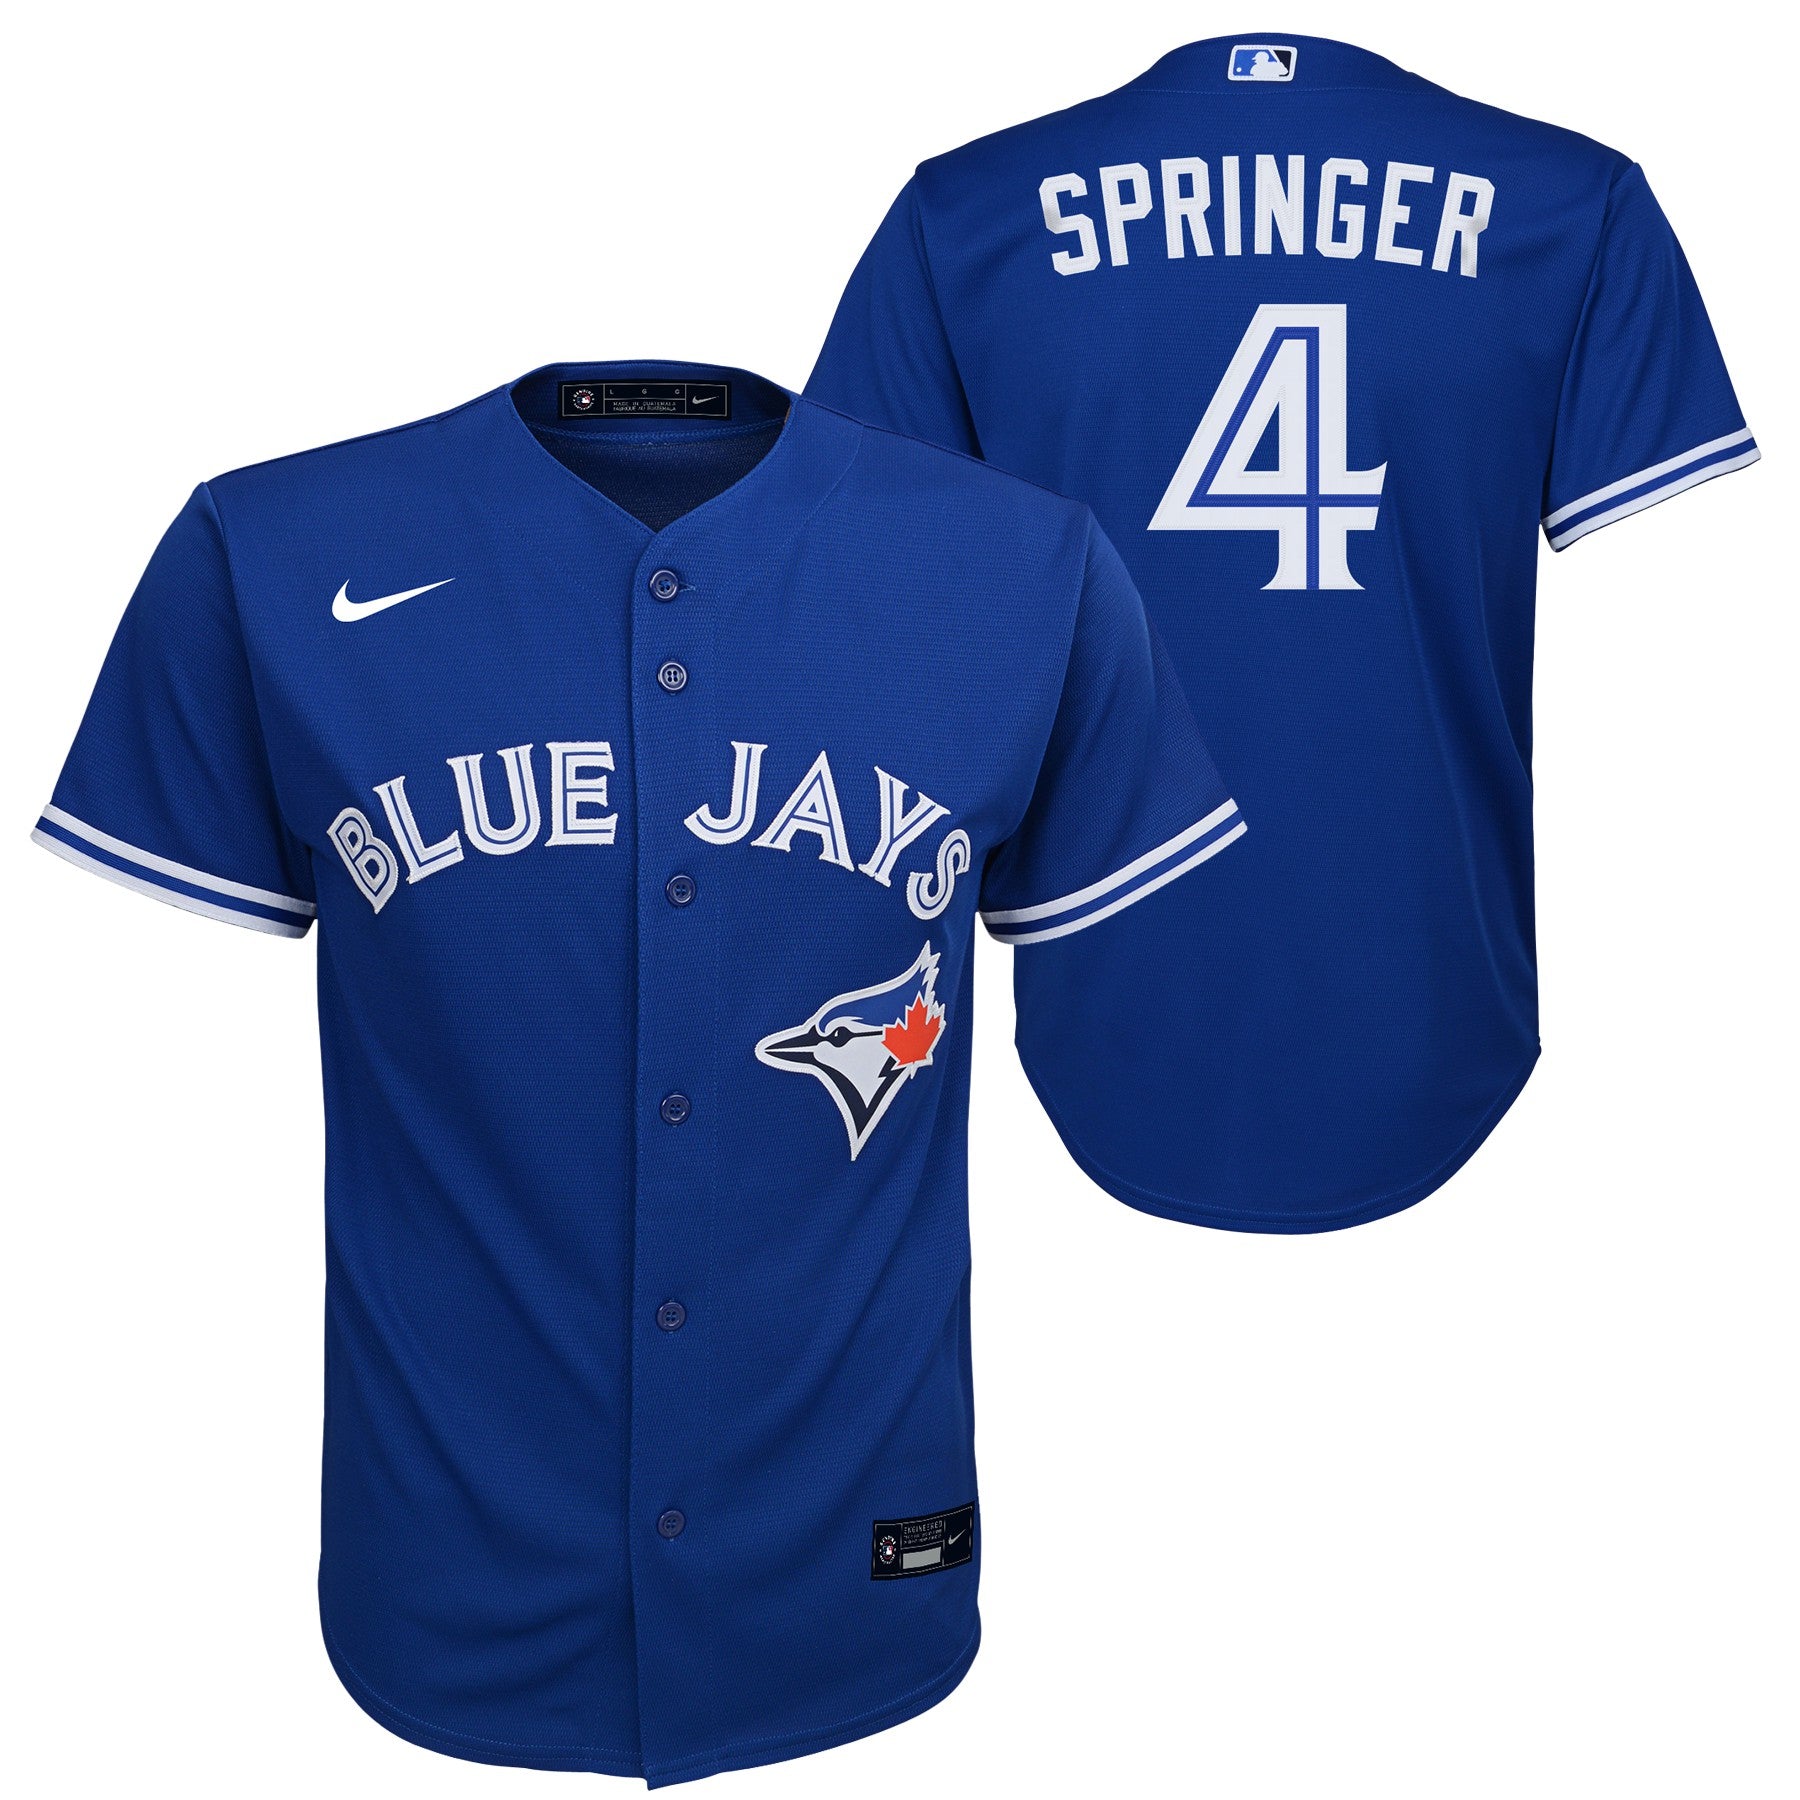 Youth Nike George Springer Royal Toronto Blue Jays Alternate Replica Player  Jersey